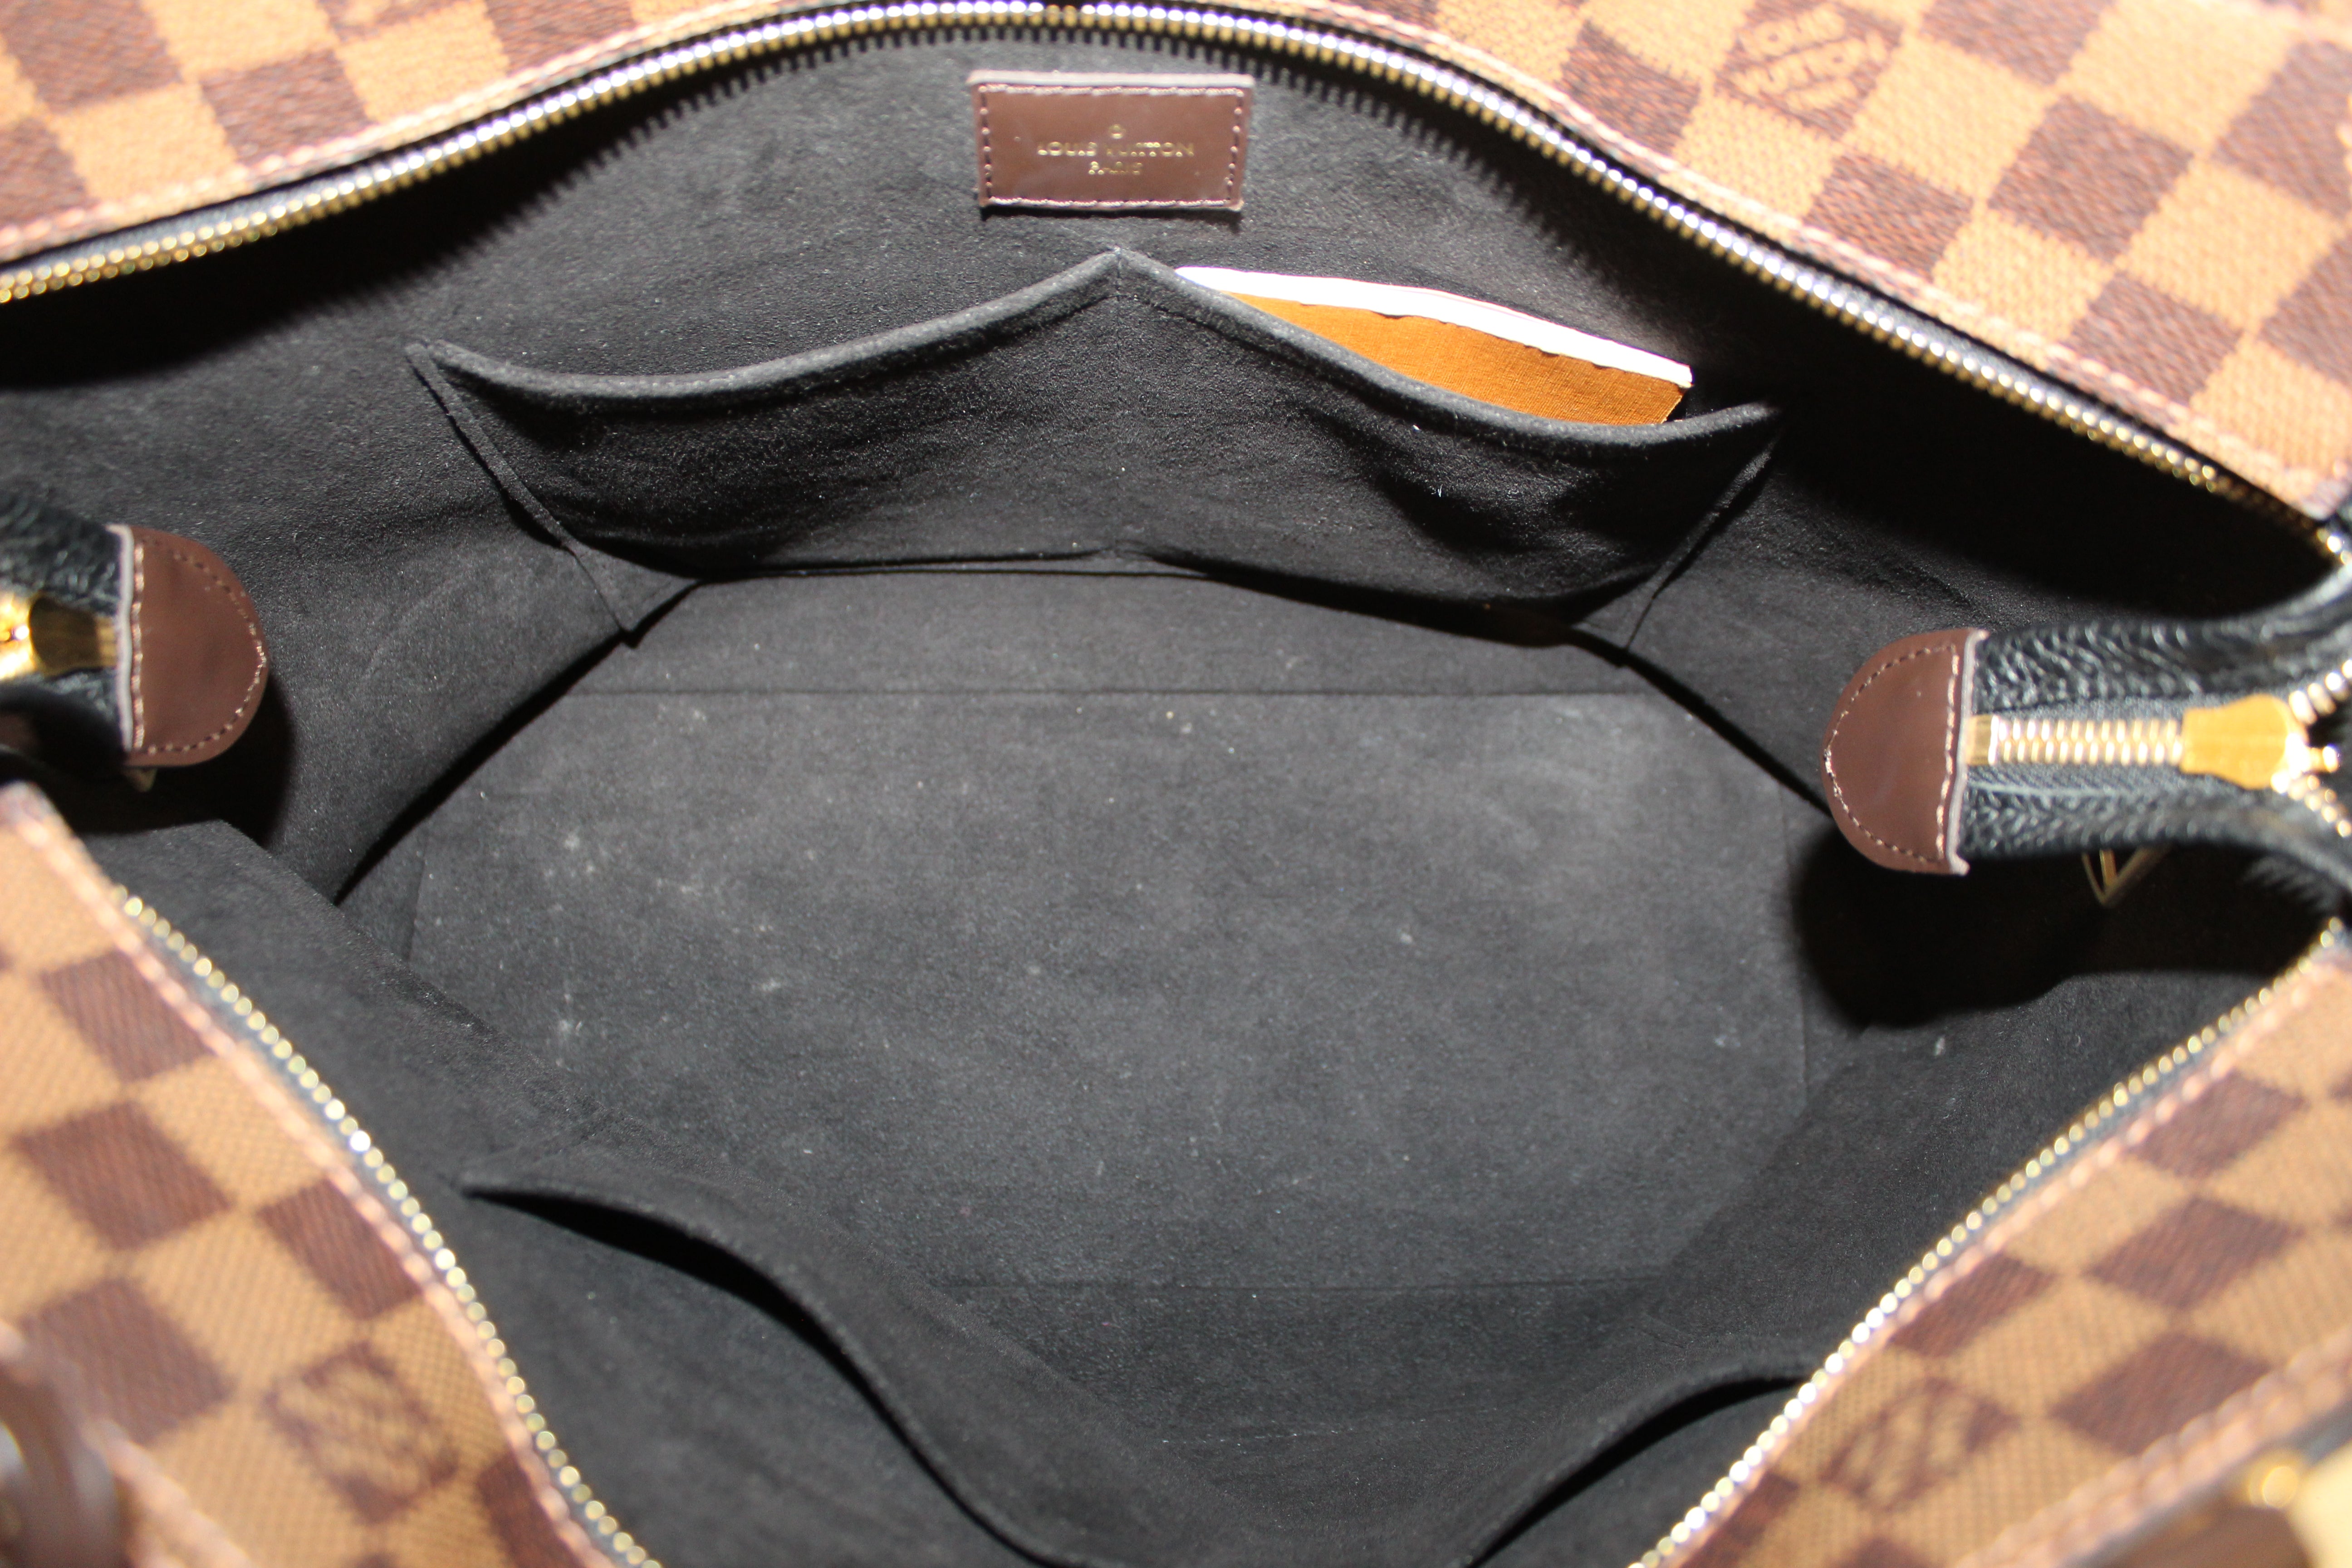 Louis Vuitton Shoulder Bag in Black Damier Canvas and Brown